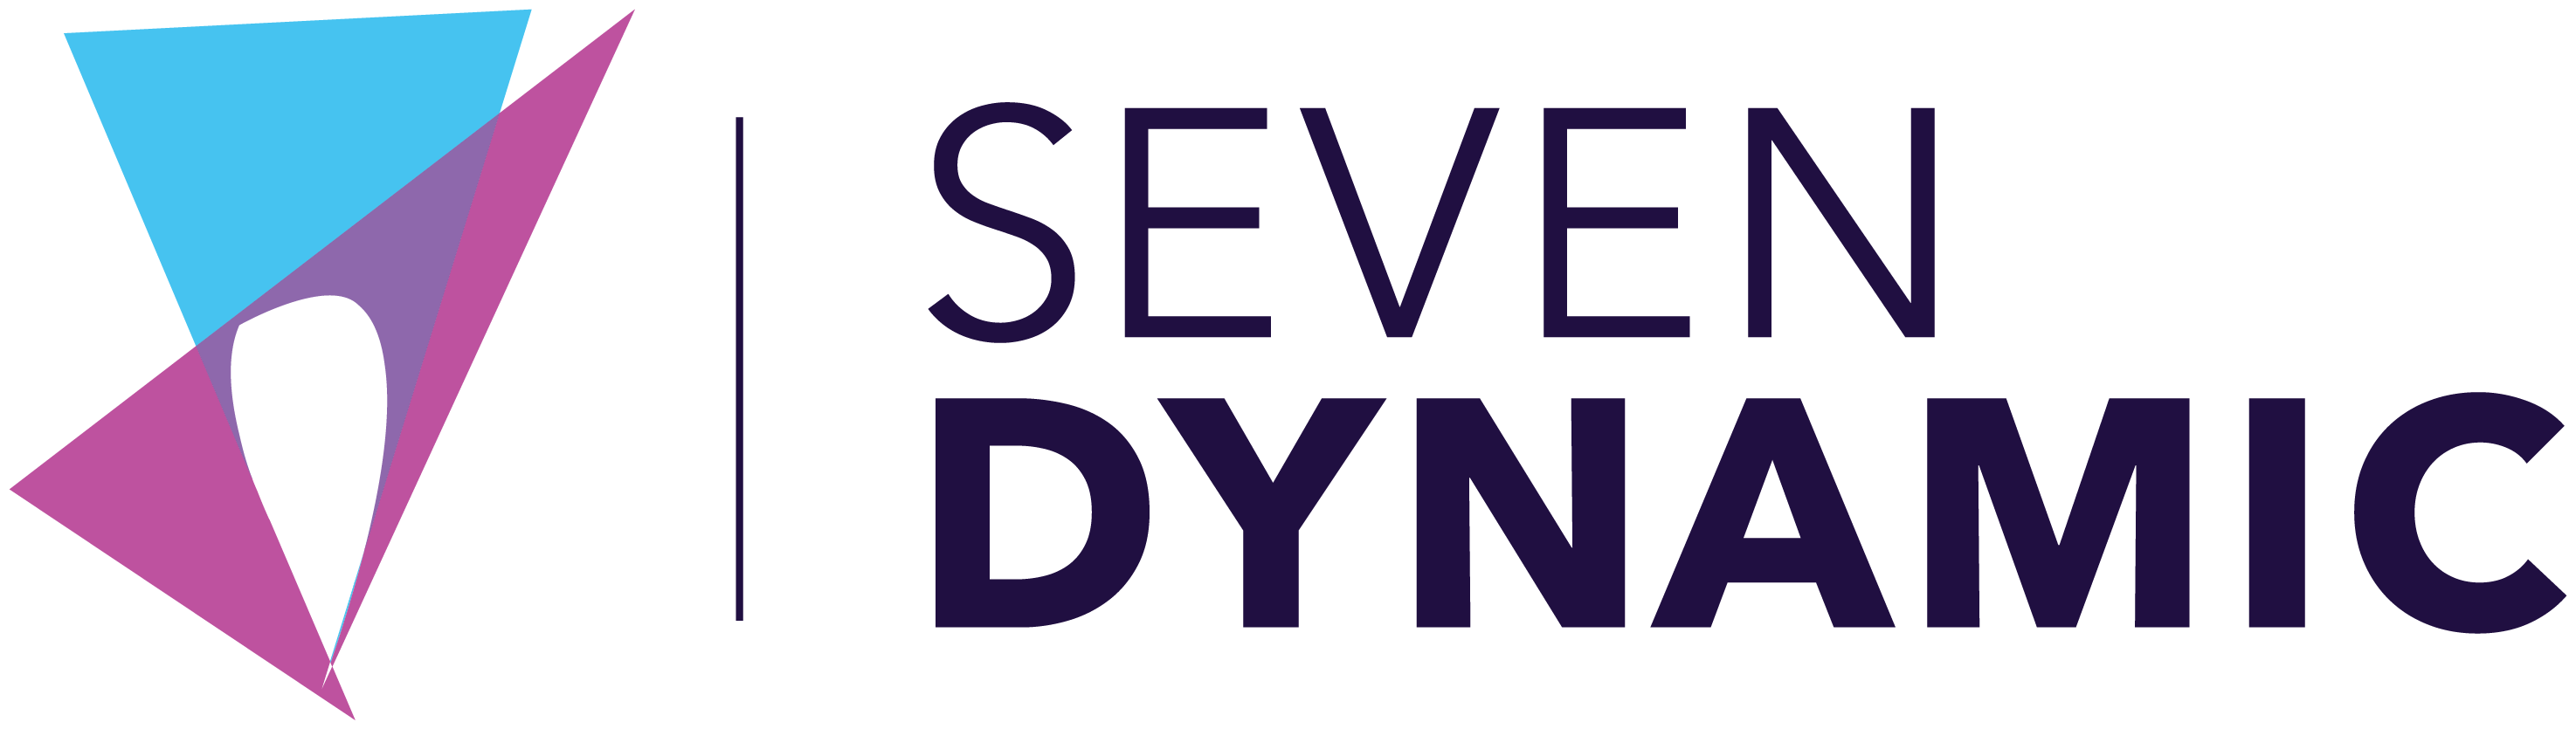 Seven Dynamic - Logo - White Background